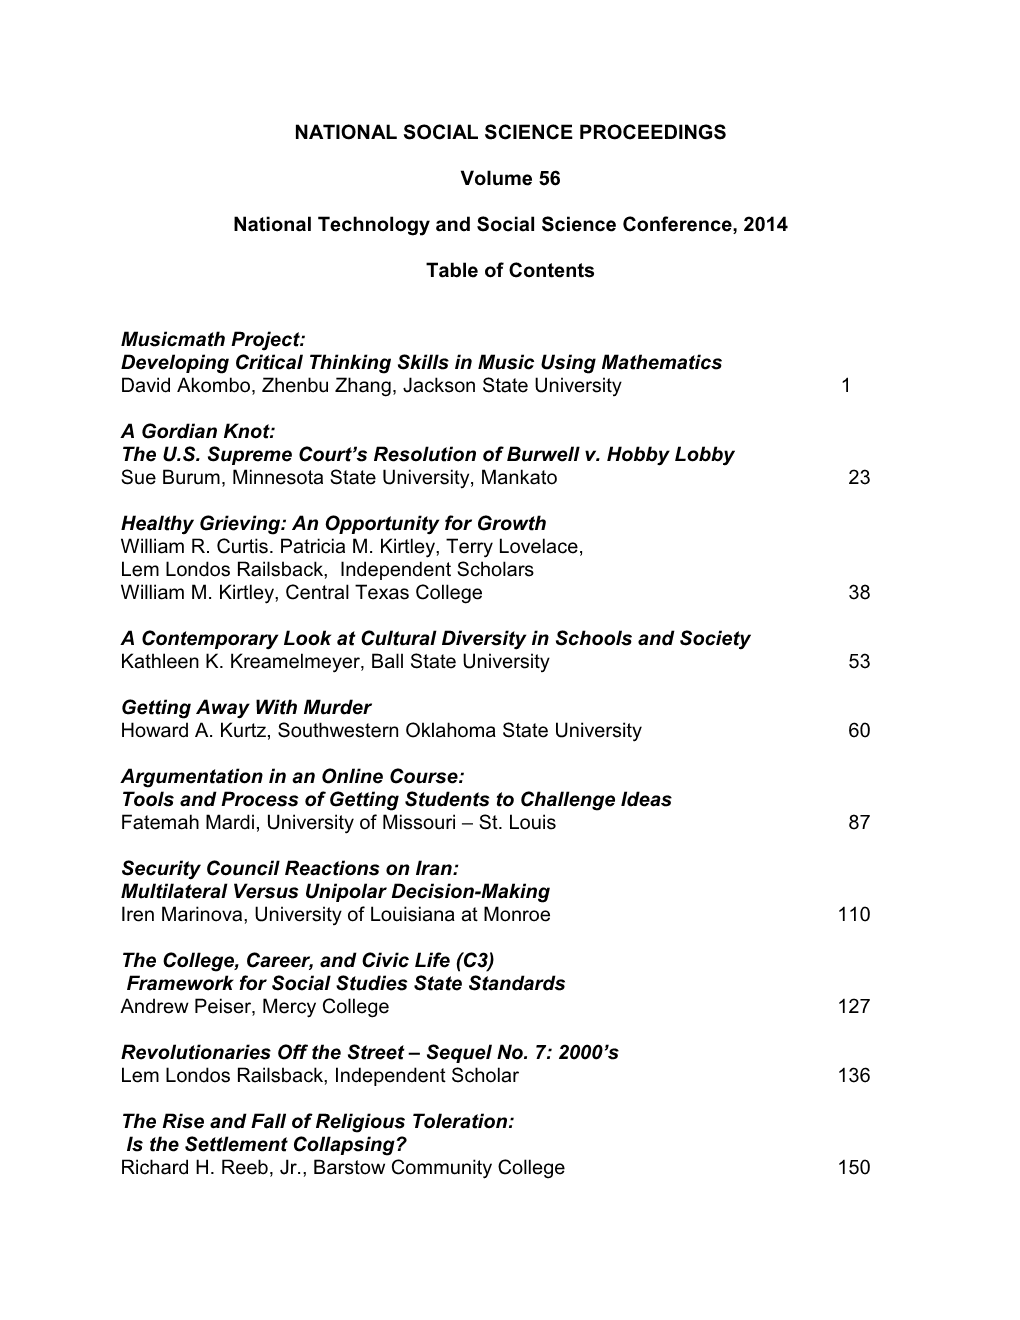 NSSA Proceedings 2014 San